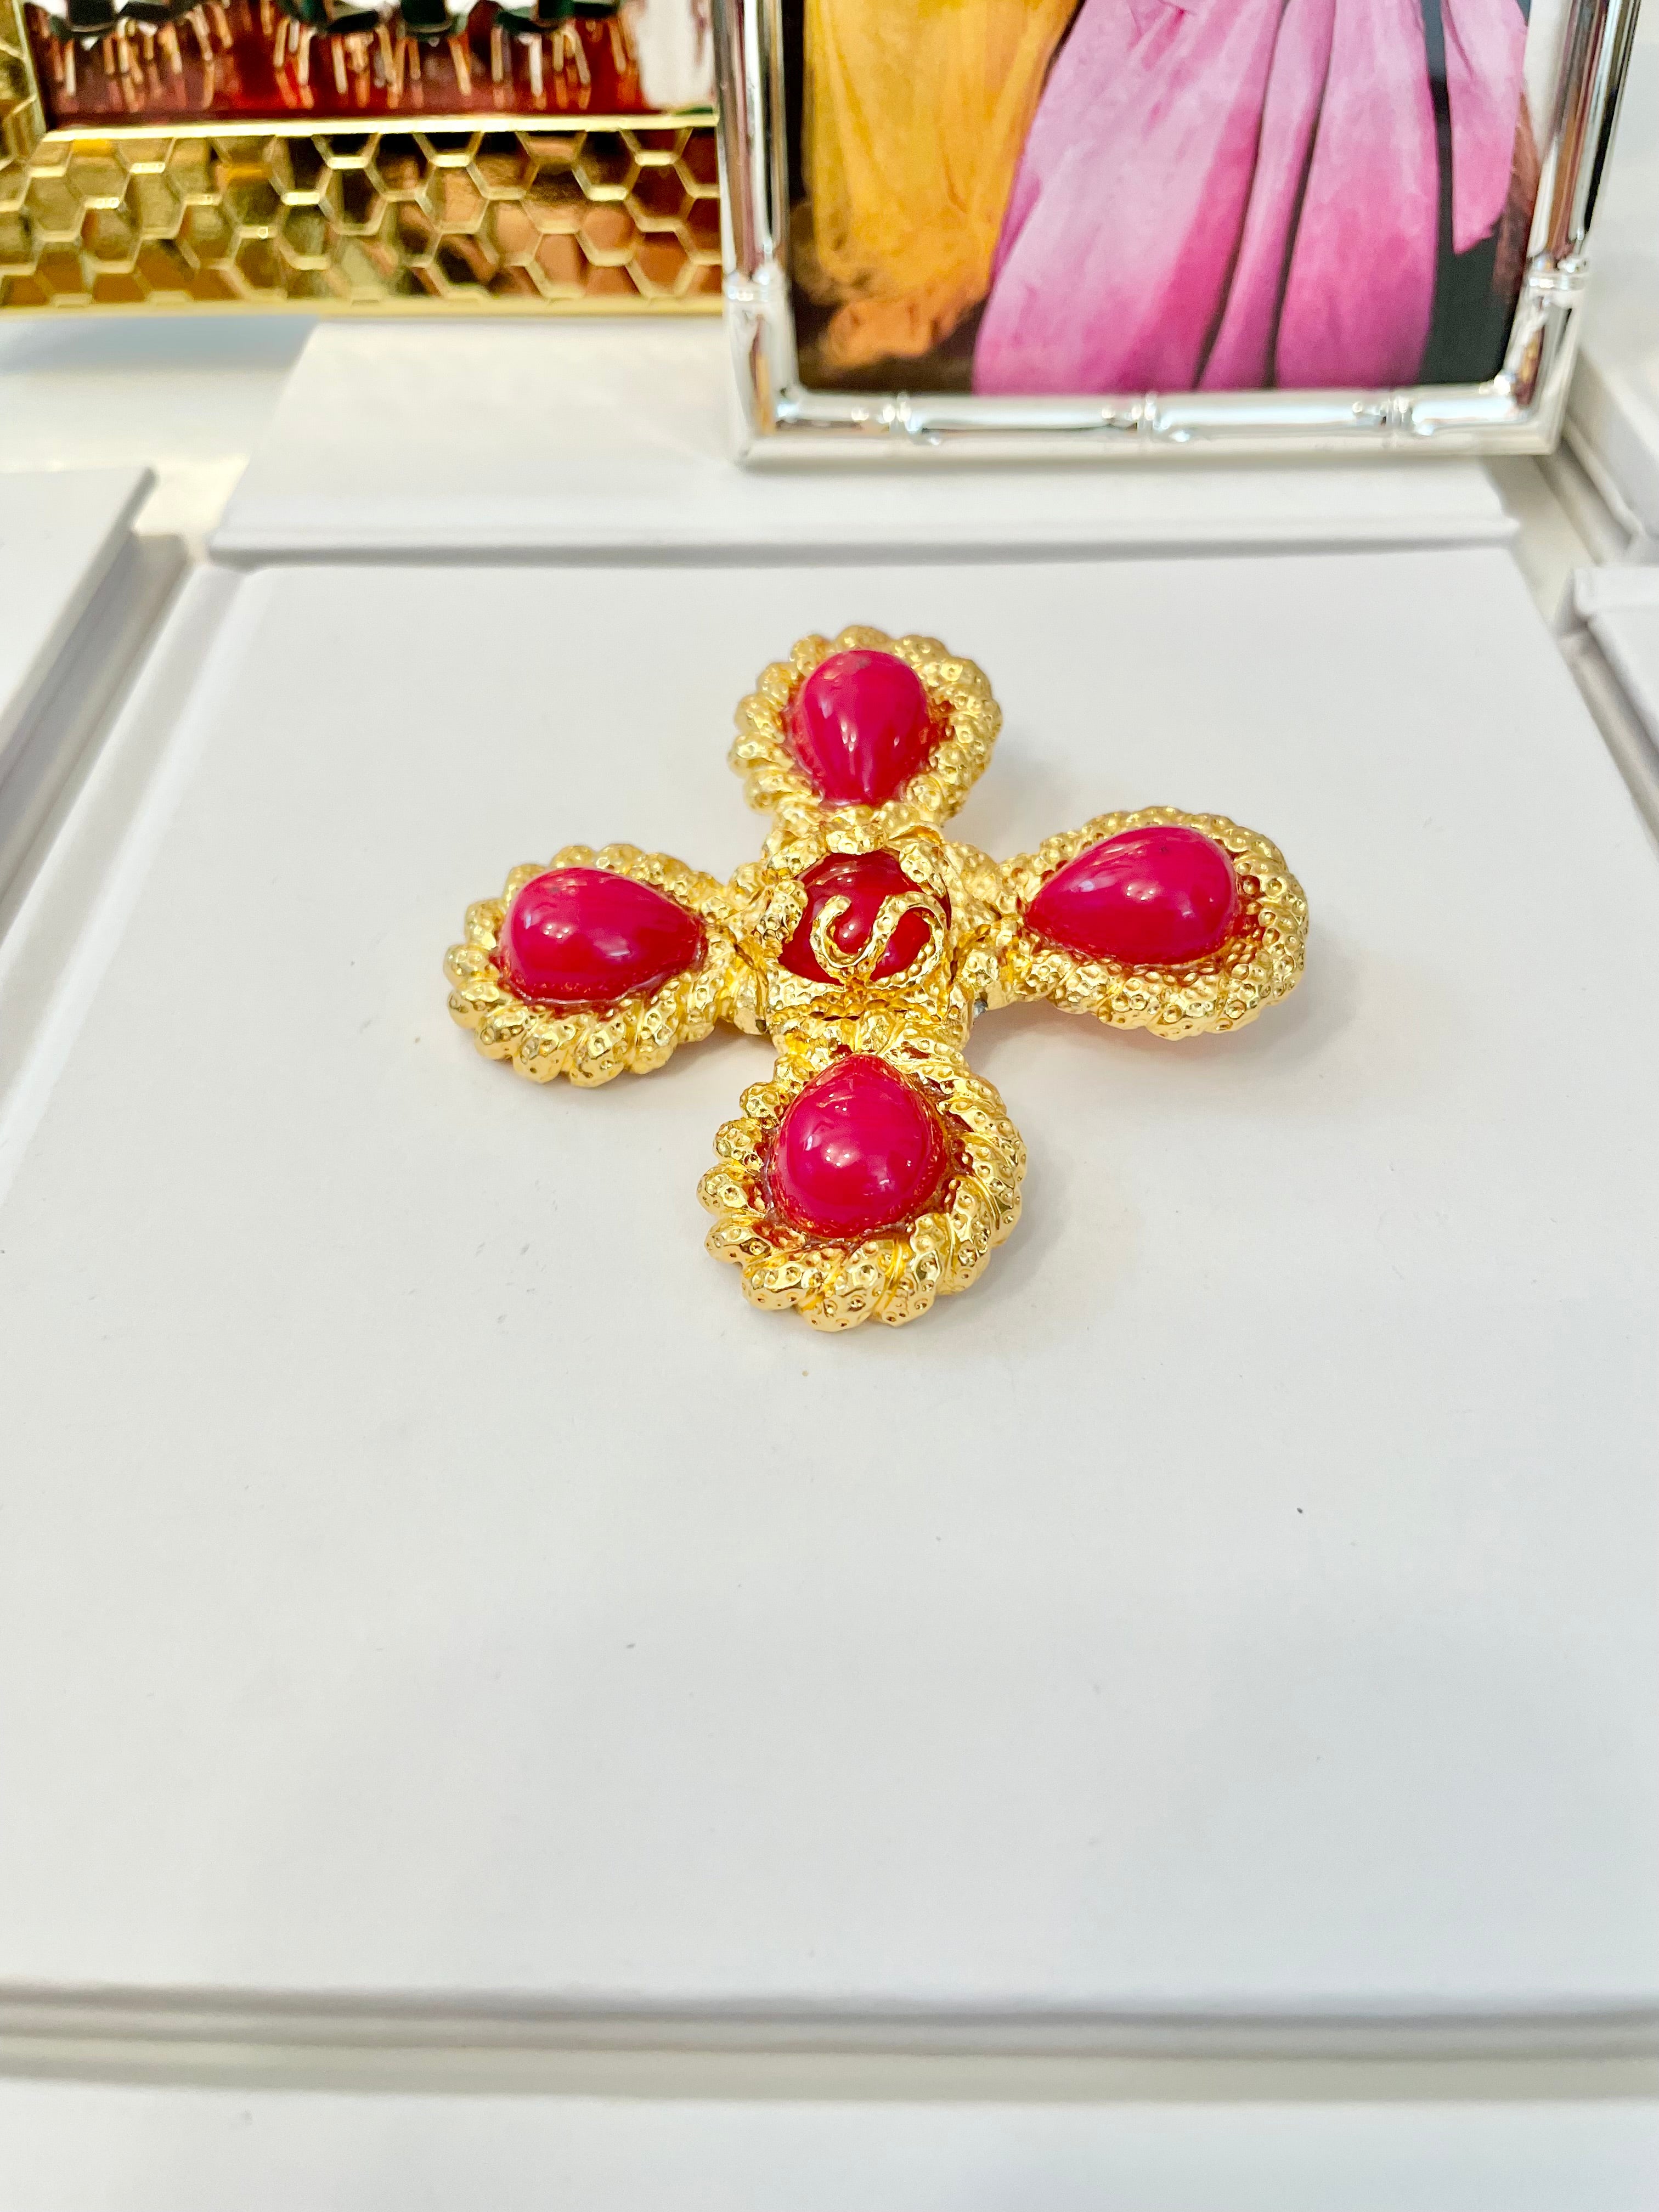 A truly classy St. John hot pink Maltese cross brooch.... so chic